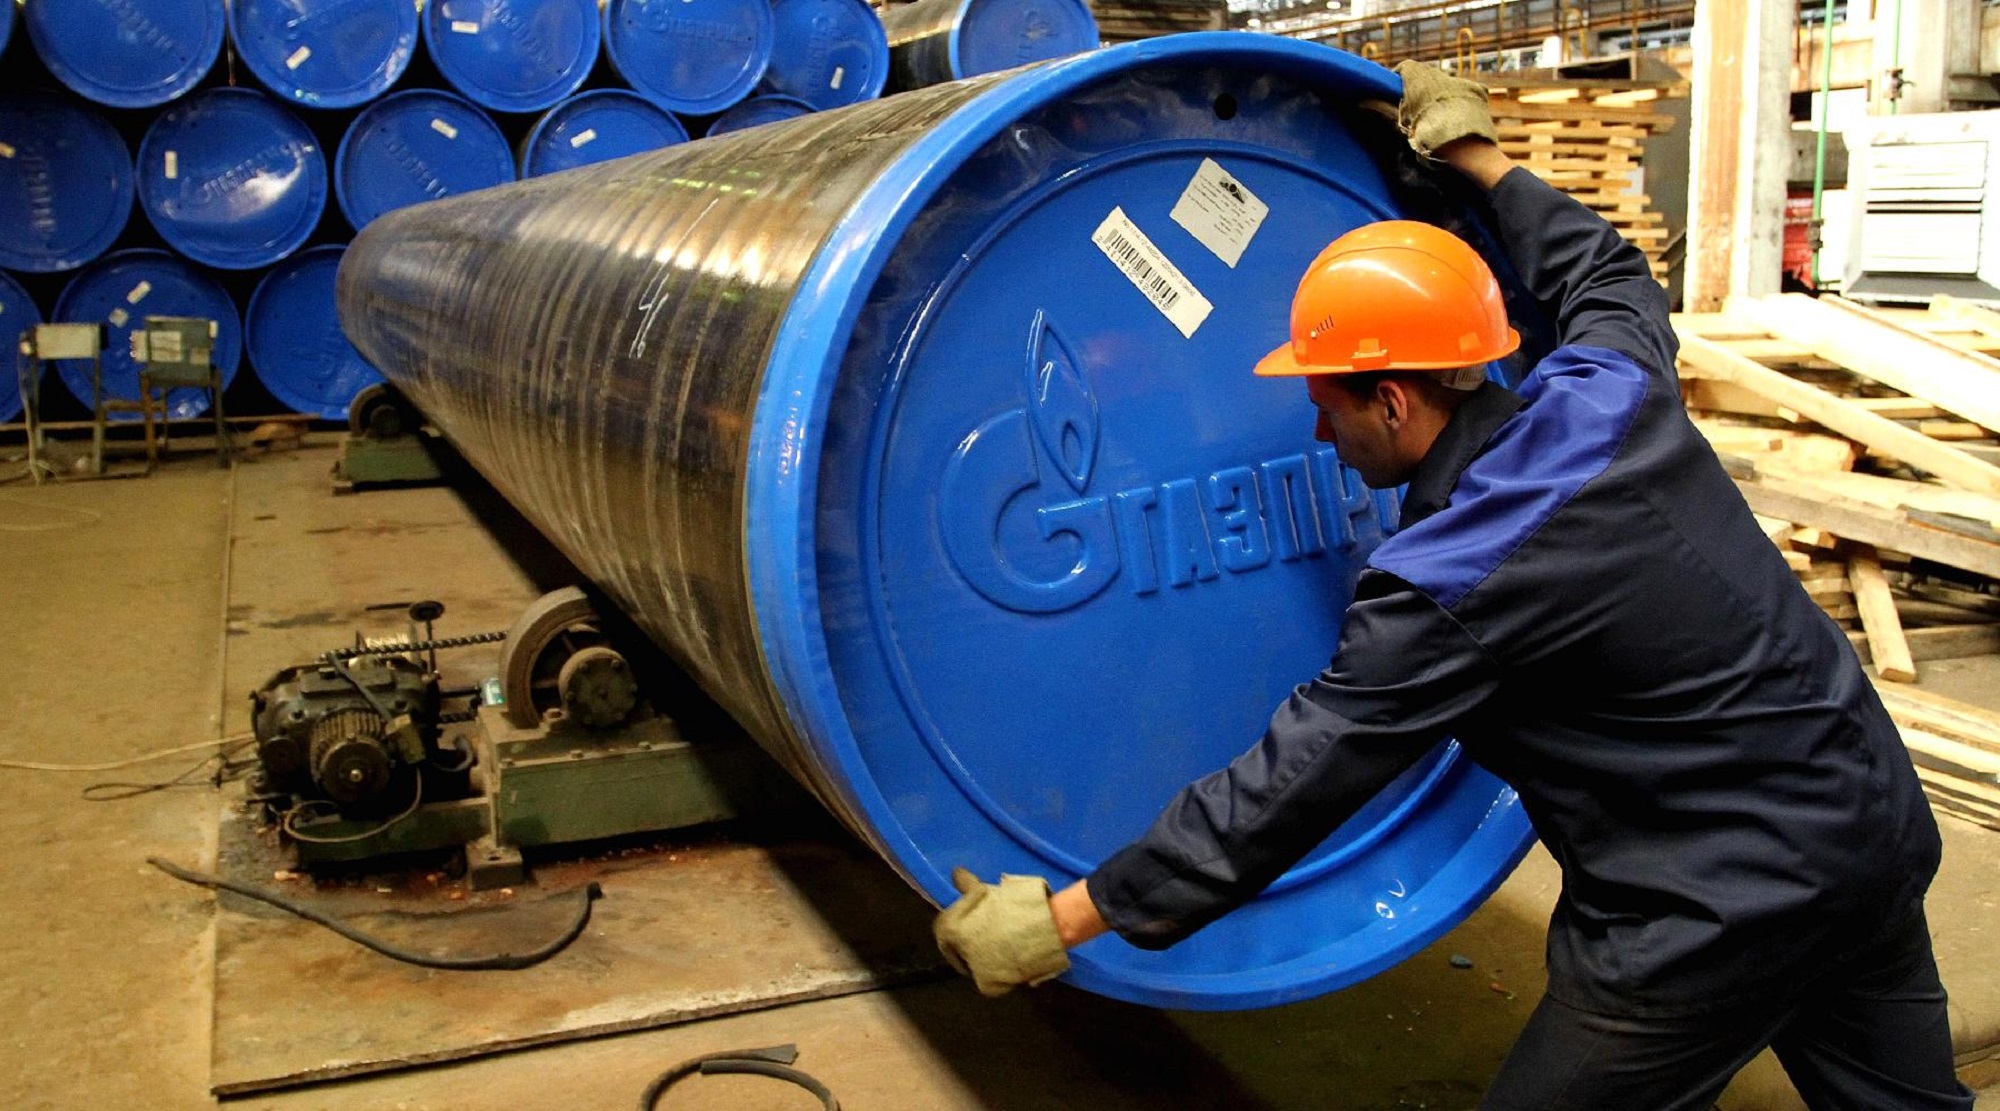 Gazprom: Διακόπτει παραδόσεις φυσικού αερίου στην Ευρώπη λόγω «ανωτέρας βίας»